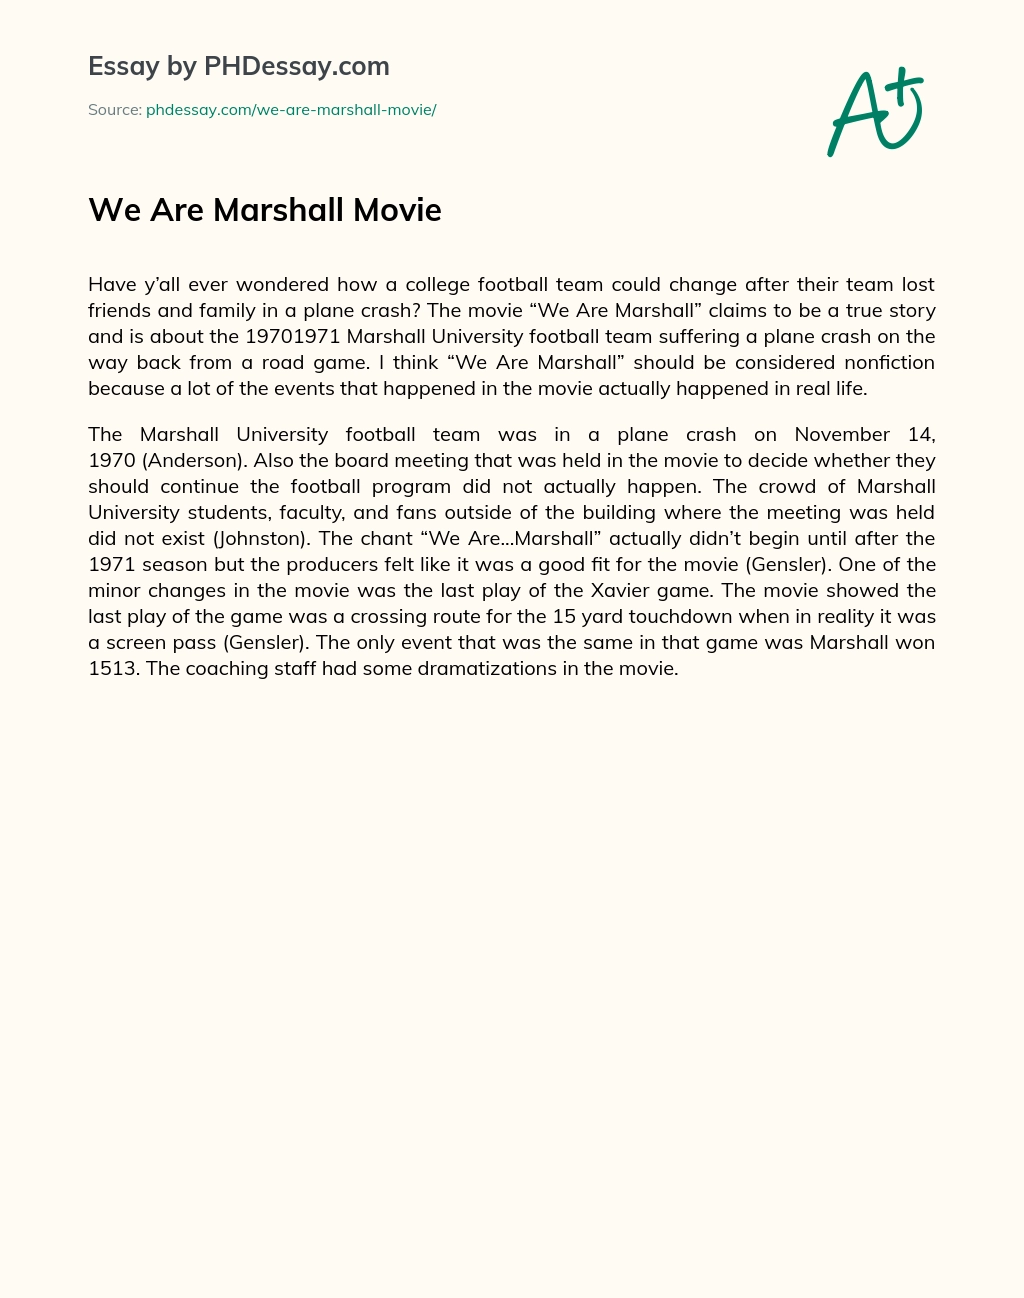 We Are Marshall Movie essay